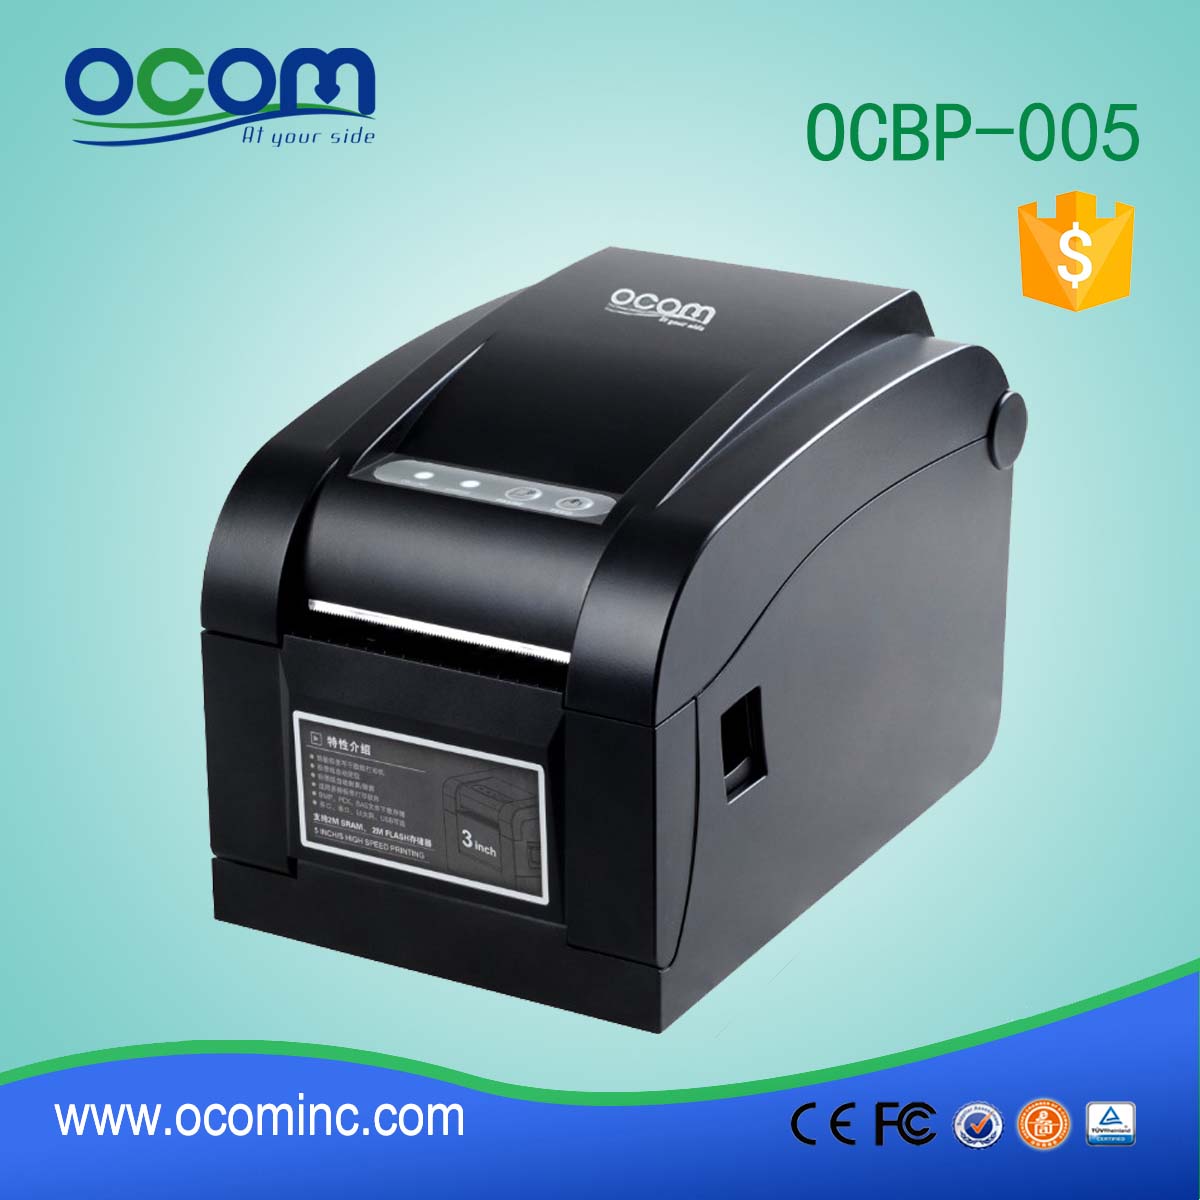 OCBP-005-U 3" Thermal Barcode Label Printer USB Interface